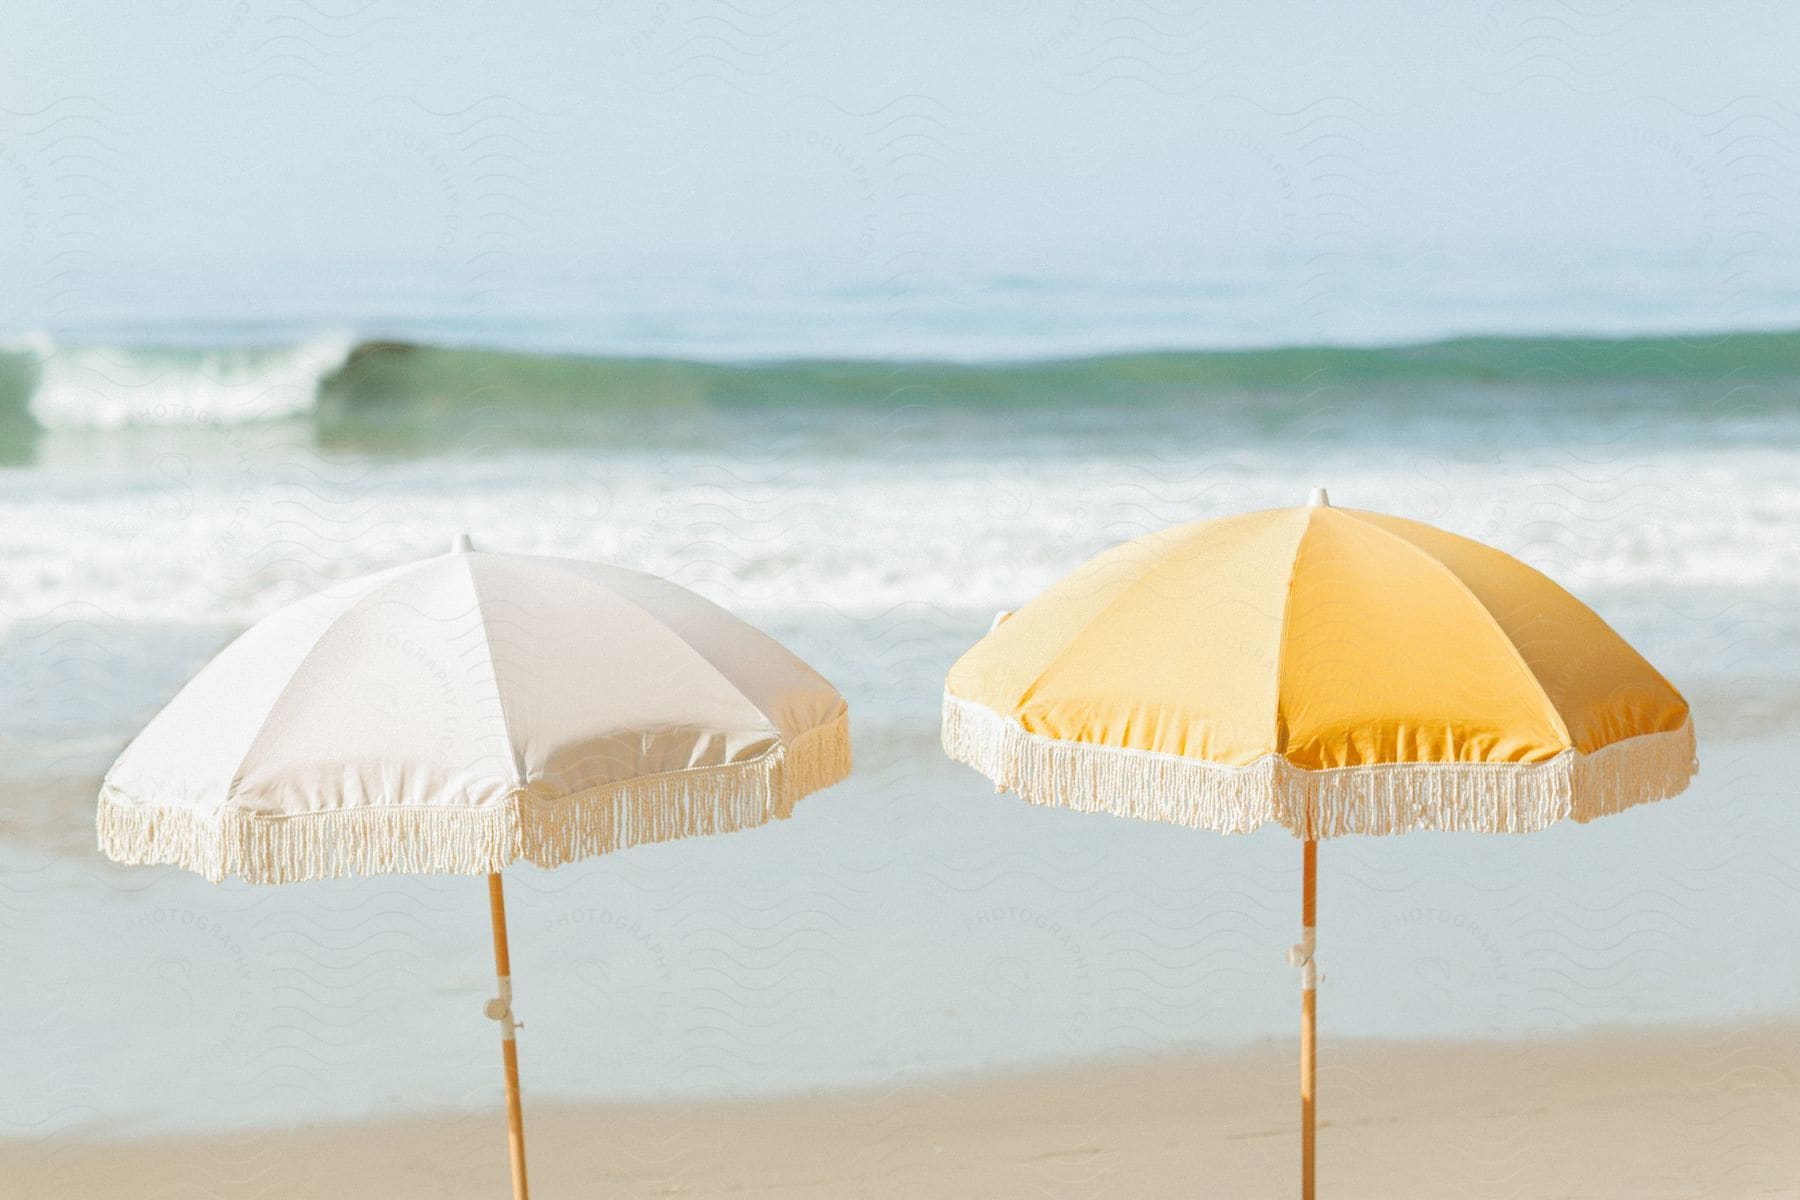 White and yellow beach umbrella against the wavy ocean